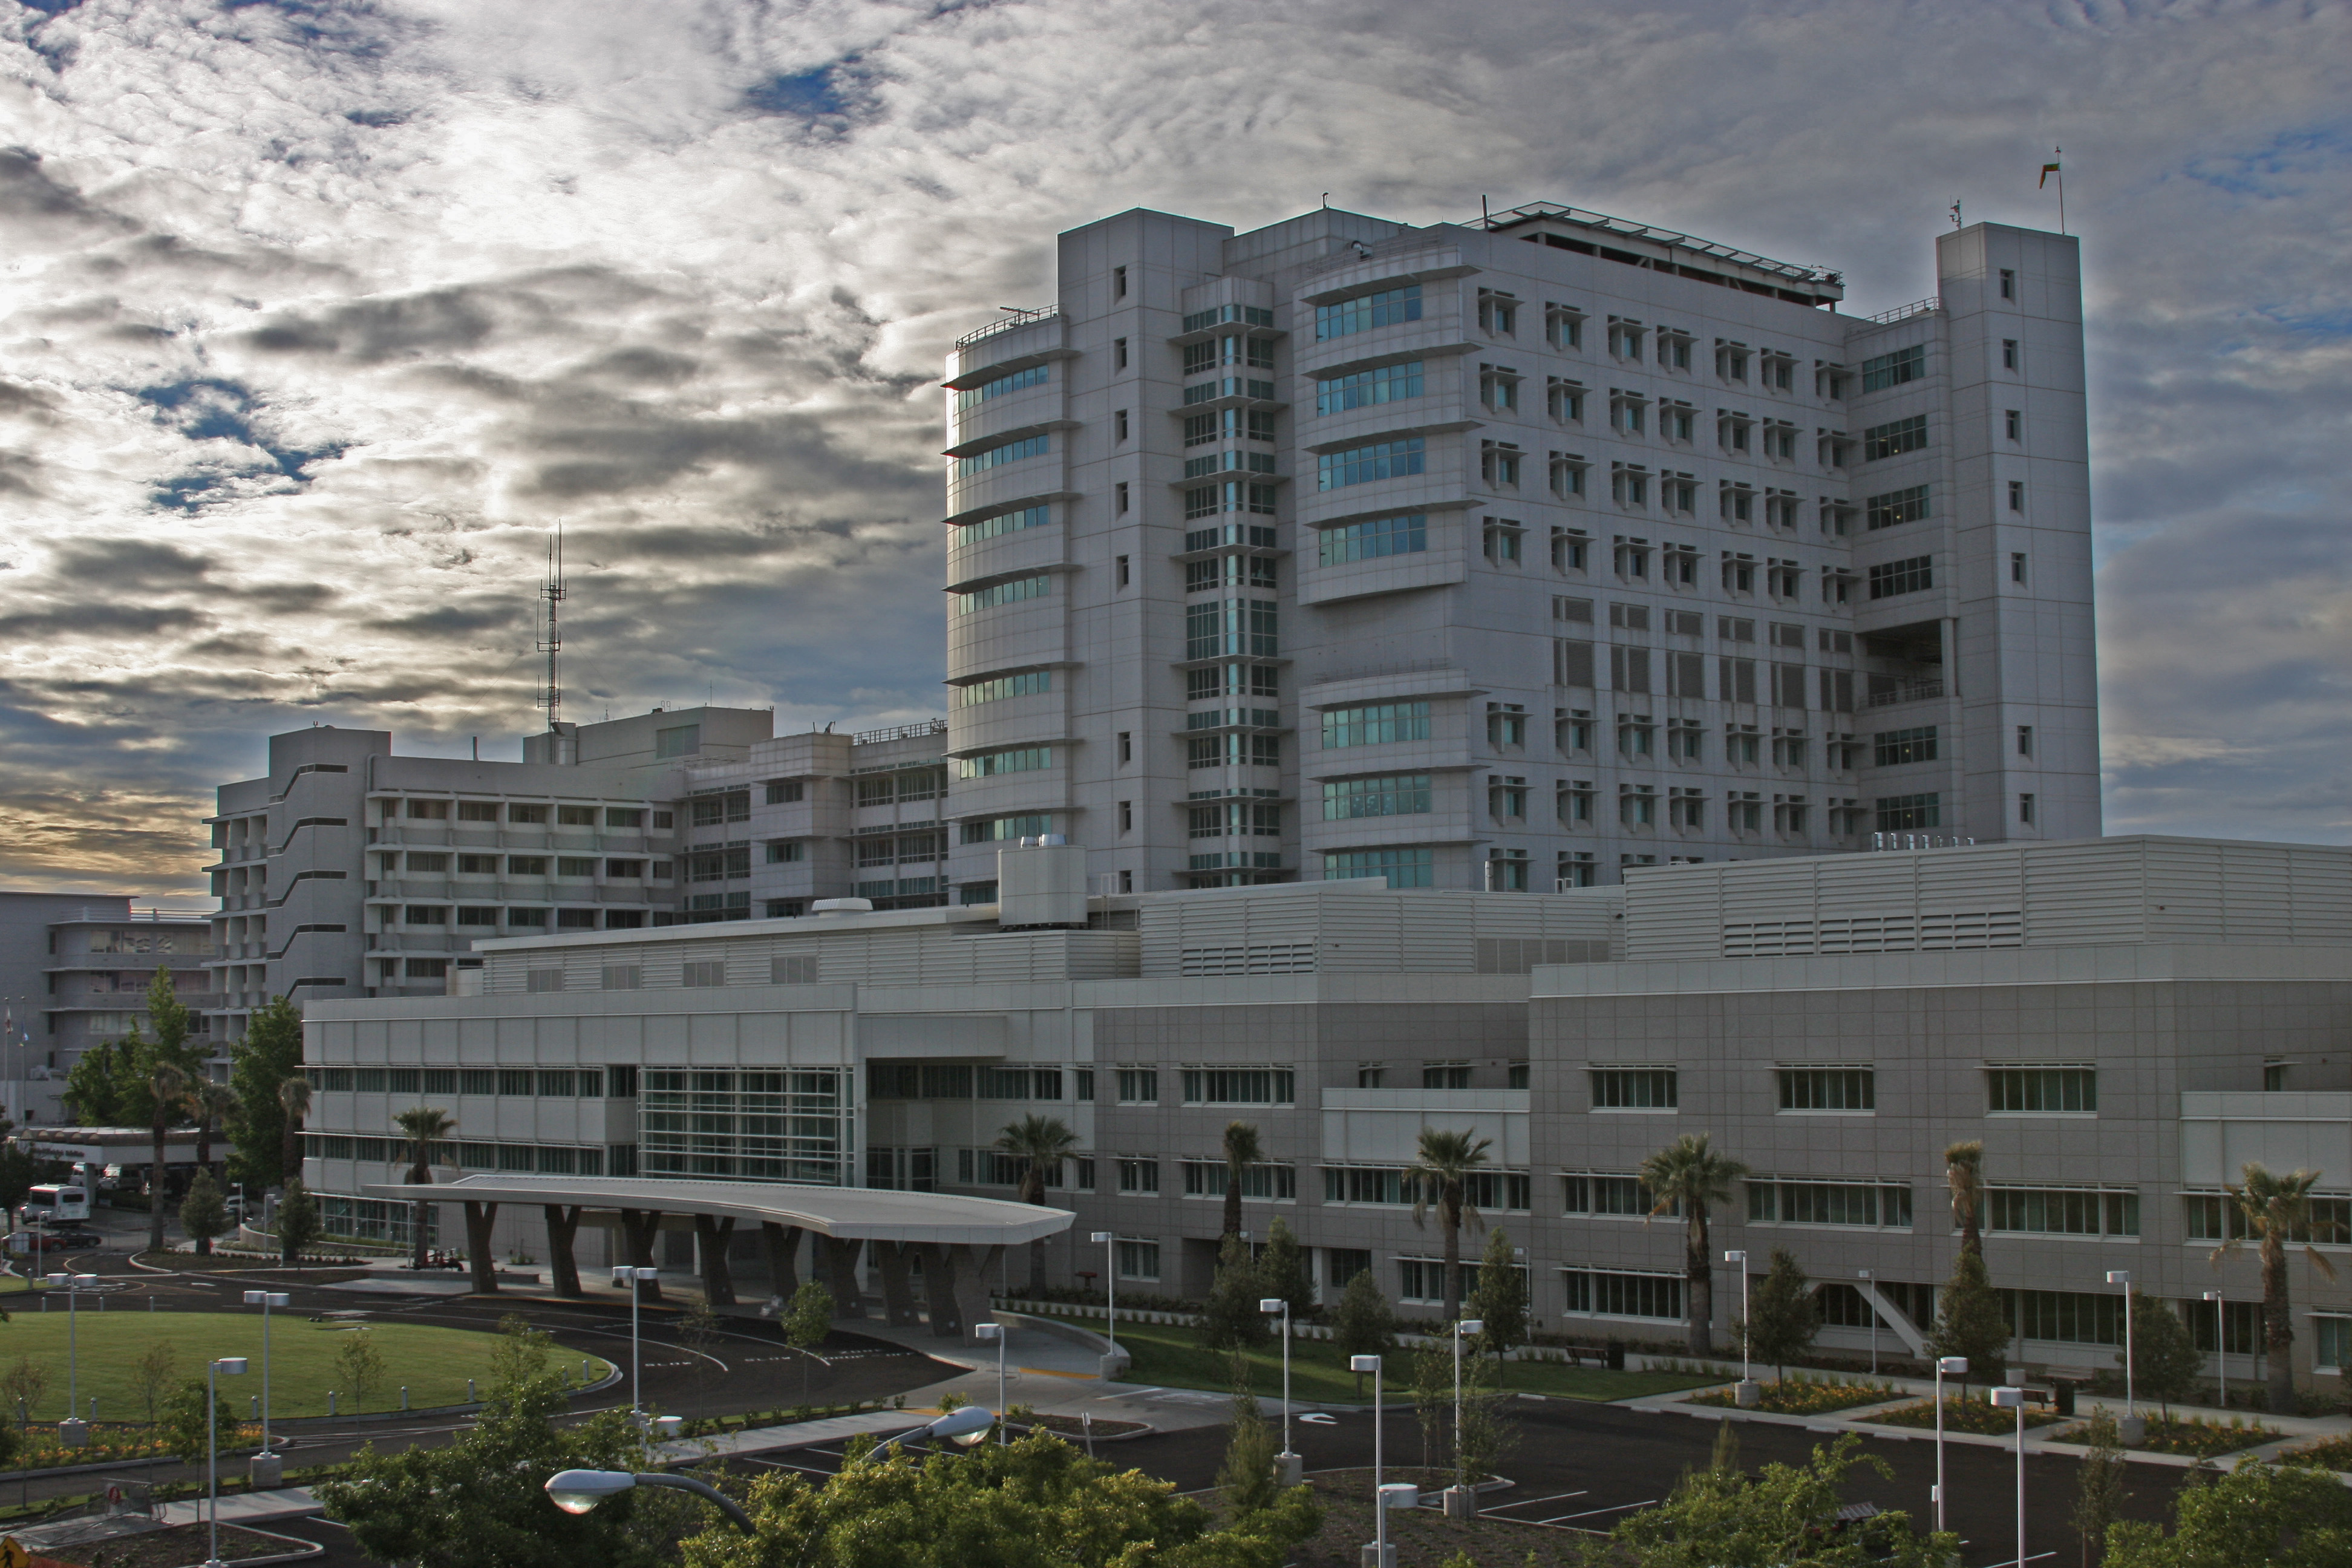 University of California Davis Medical Center 2